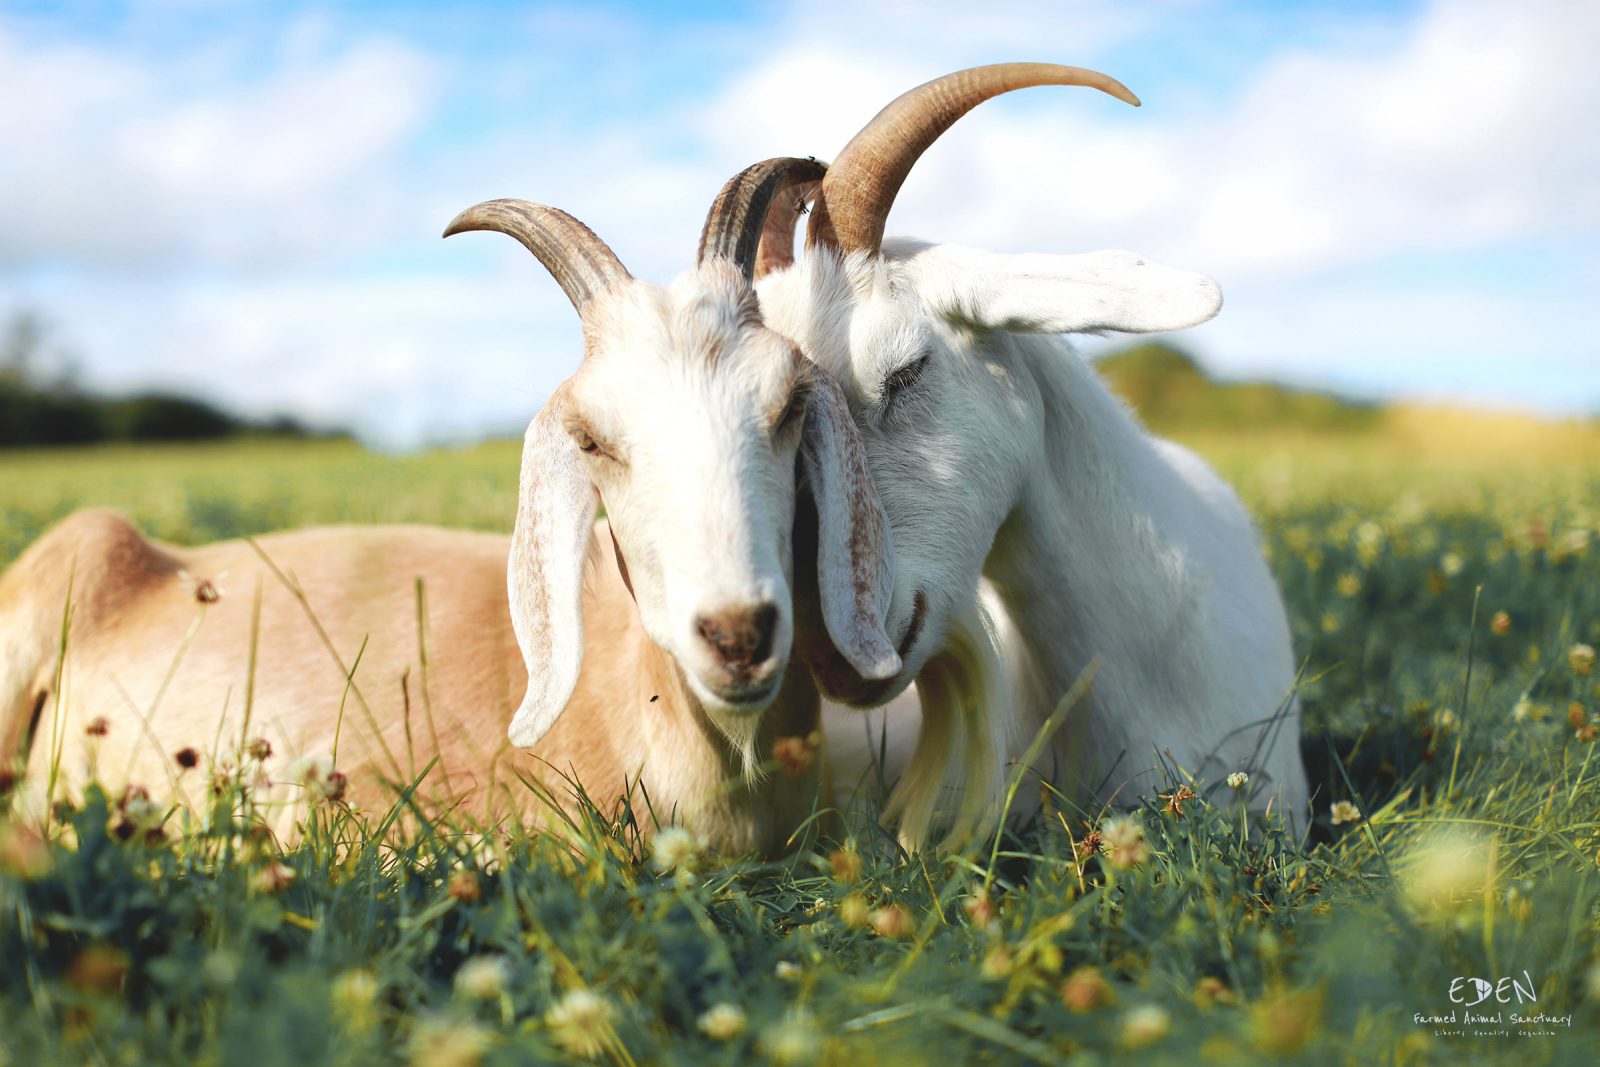 goats resting at eden farmed animal sanctuary ireland